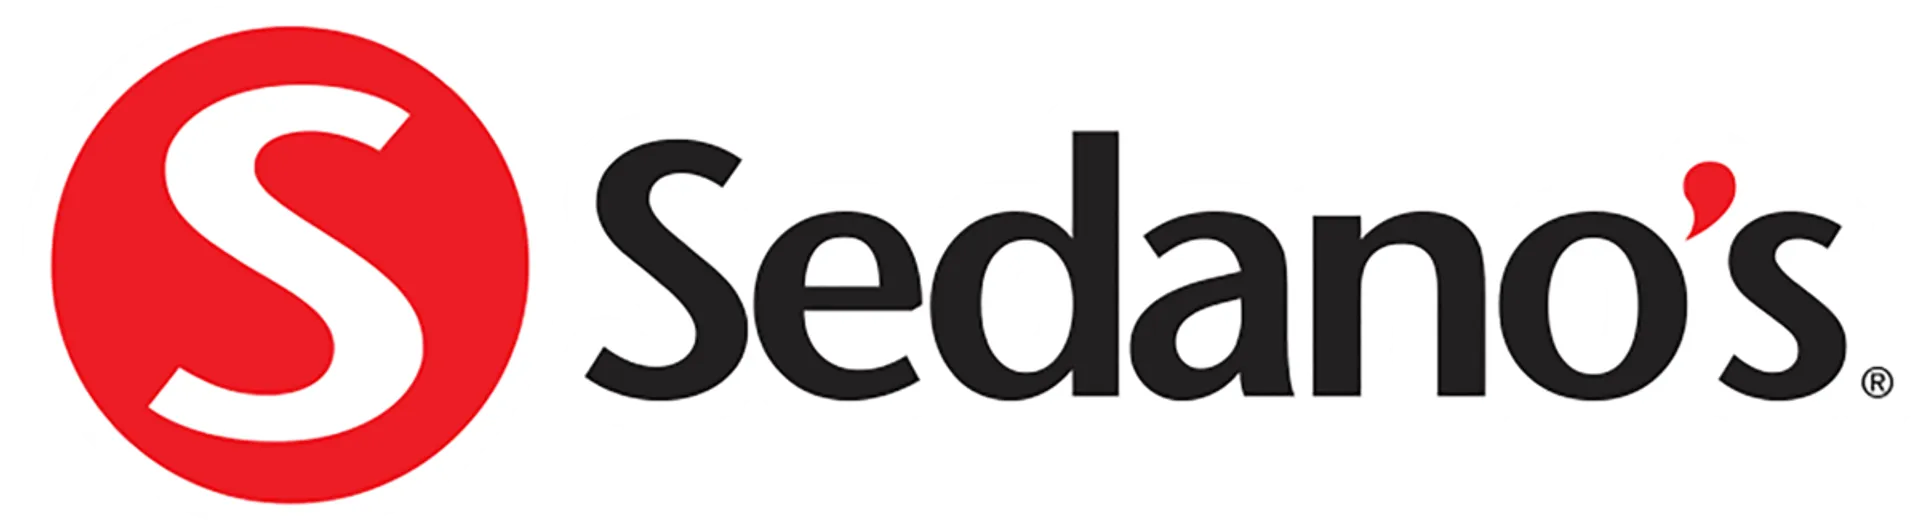 SEDANO'S logo. Current weekly ad